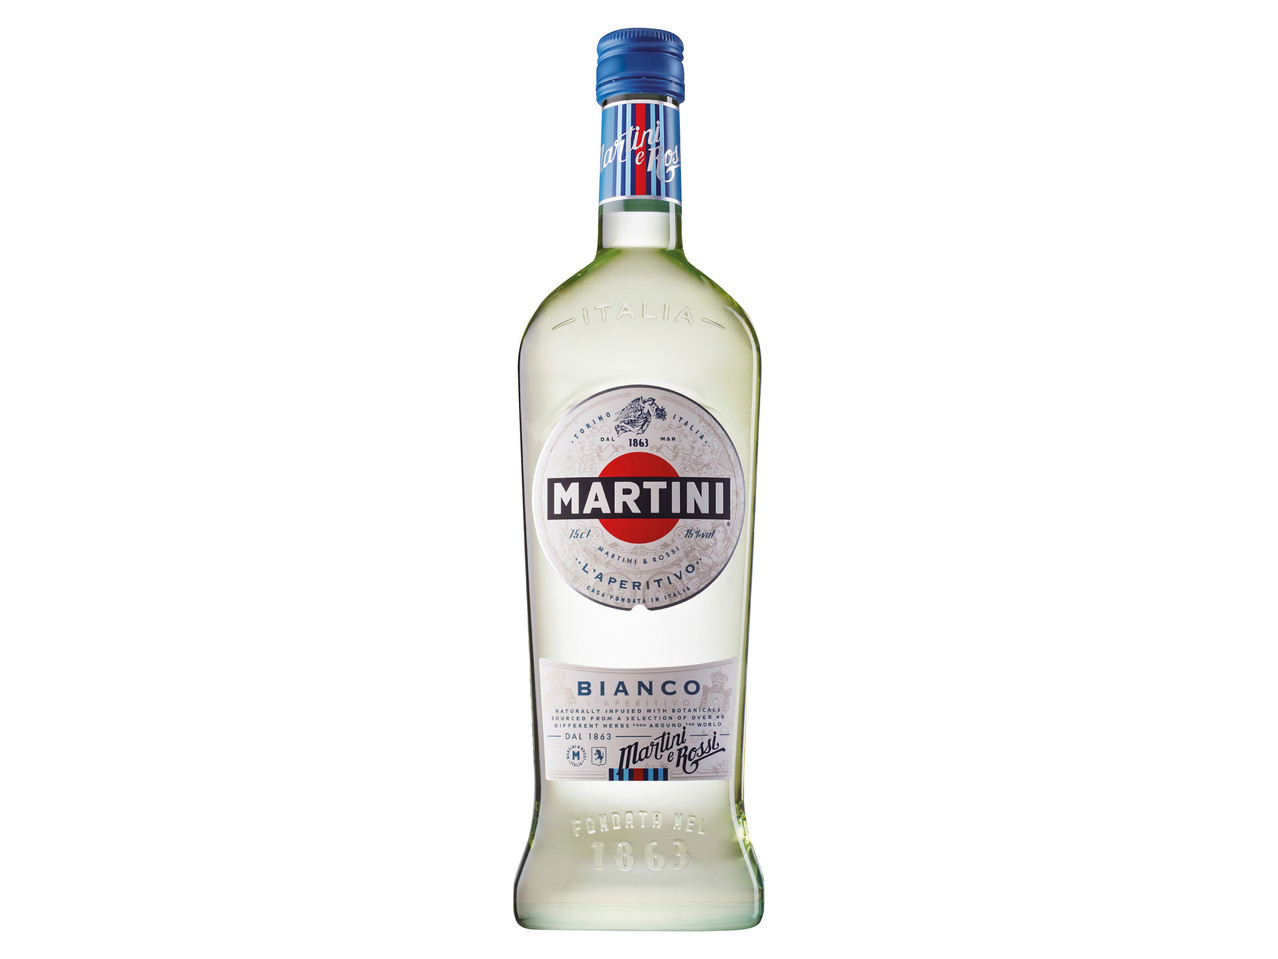 Martini Bianco / Extra Dry